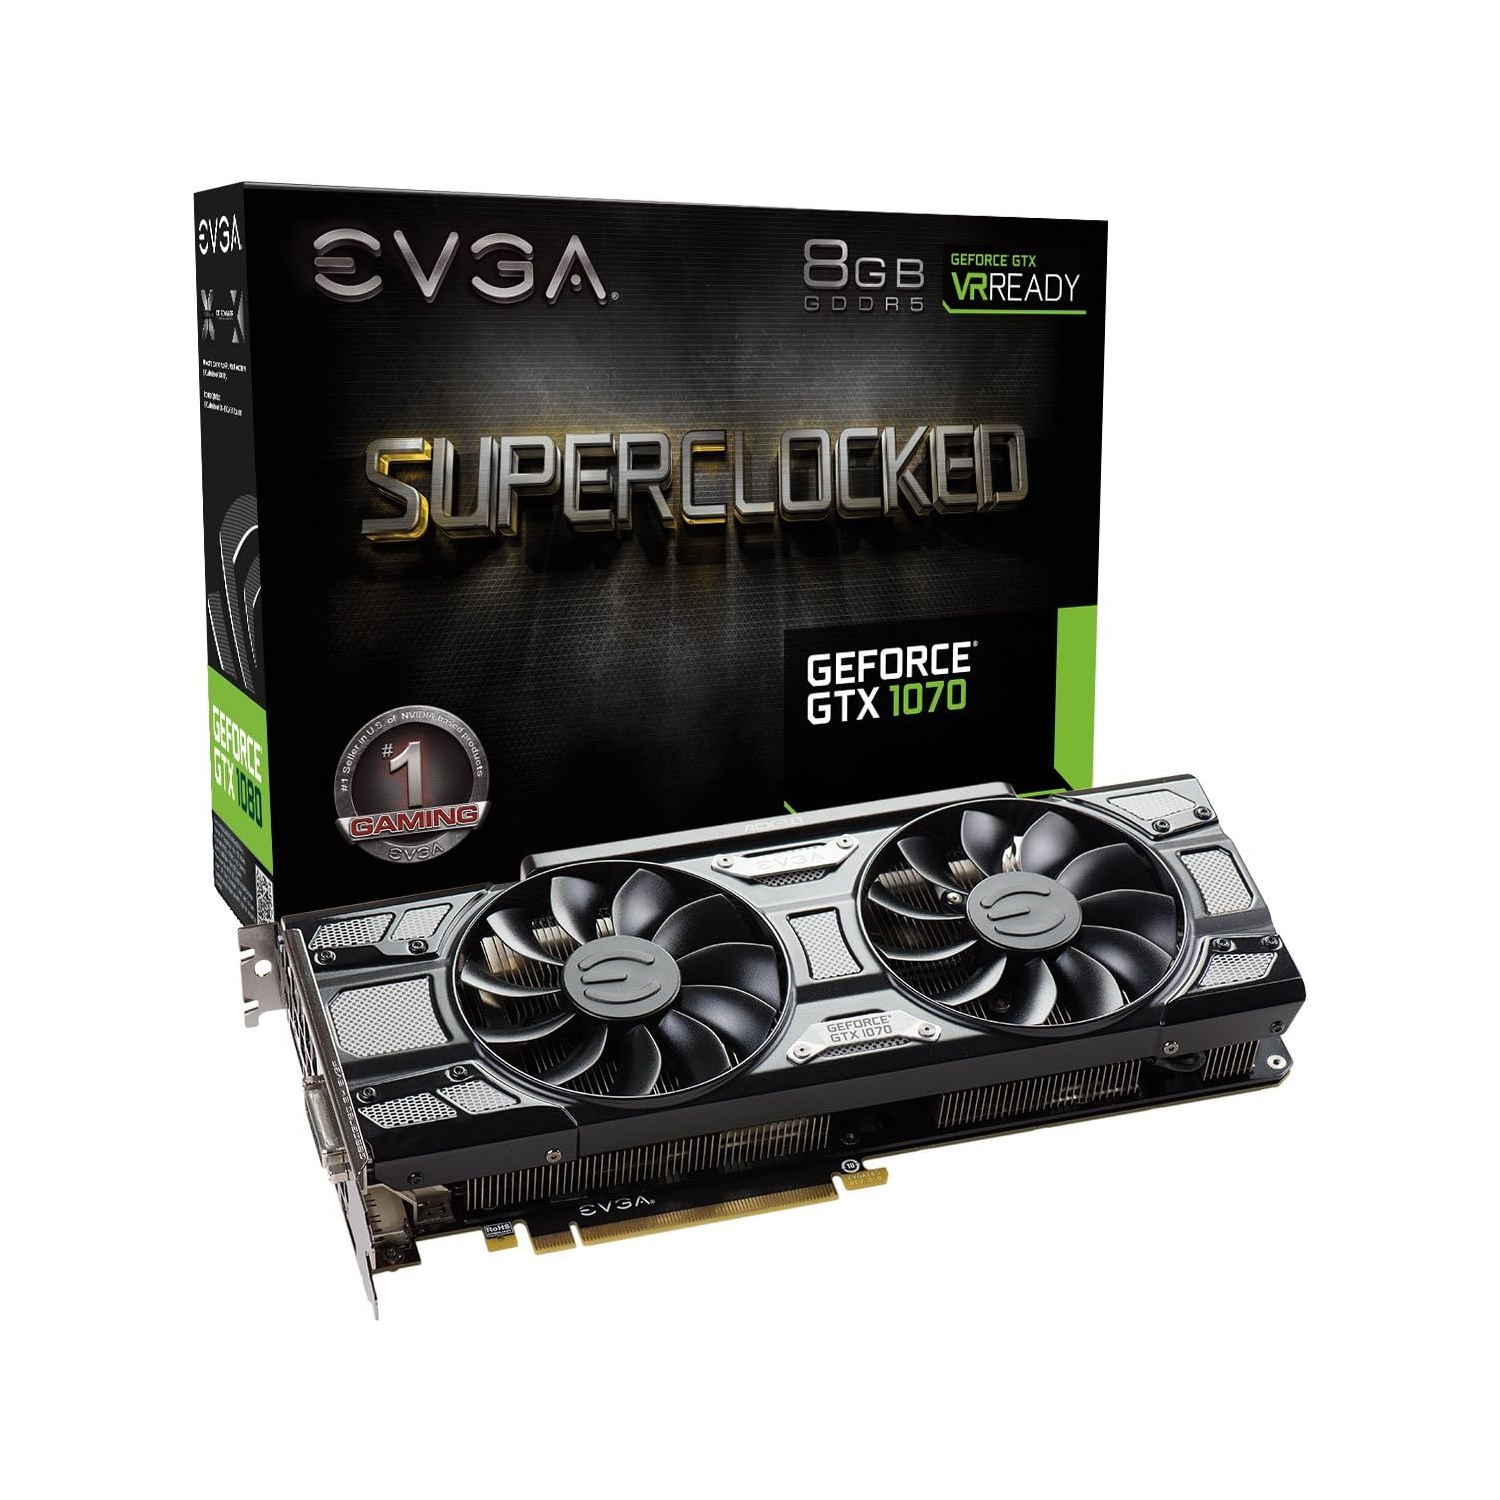 Refurbished (Good) 8.0GB Nvidia EVGA Geforce GTX 1070 Gaming Black Edition videocard